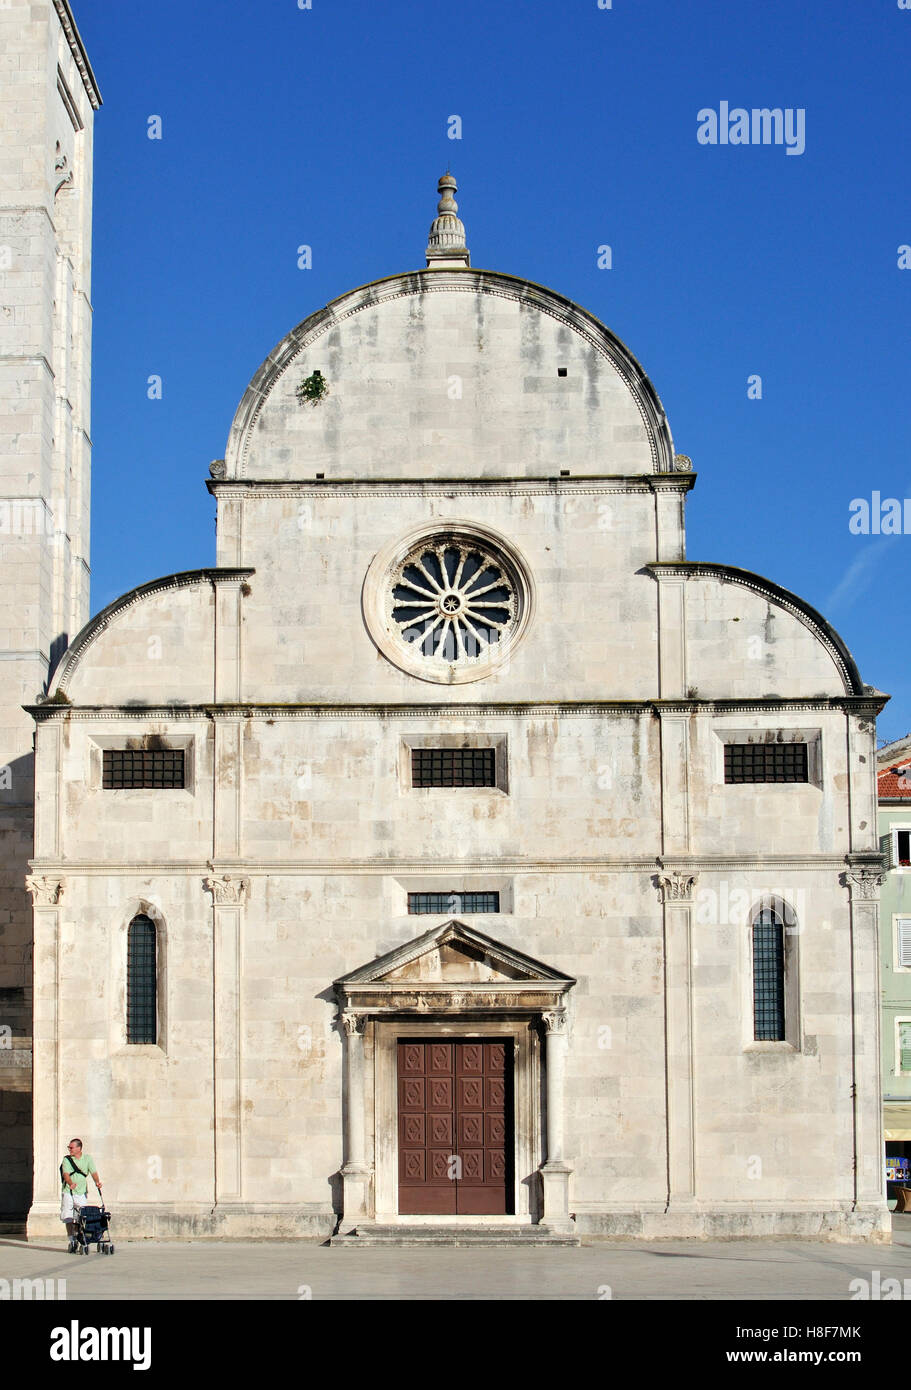 Facade of St Mary's Church, Crkva svete Marije, in Zadar, Dalmatia, Croatia, Europe Stock Photo